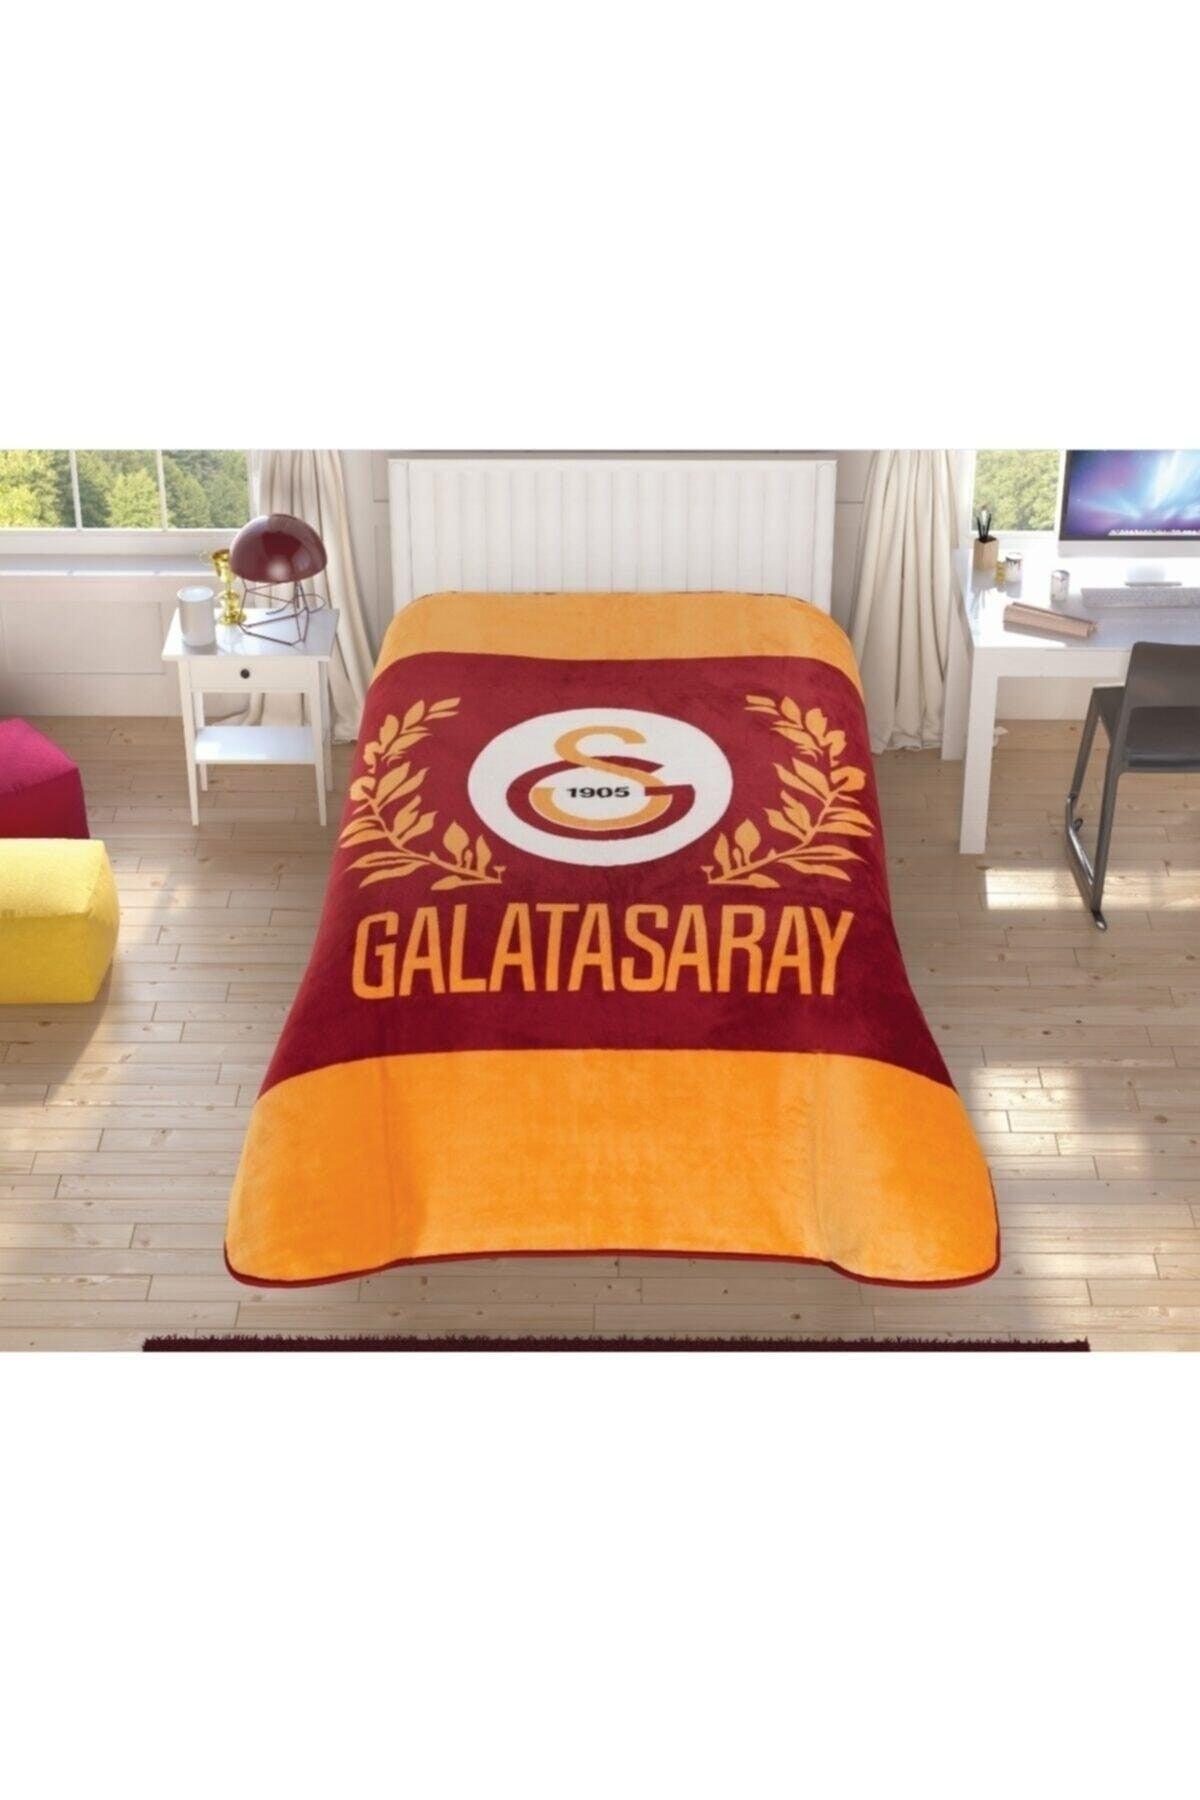 Galatasaray Yellow Red Licensed Blanket - Swordslife